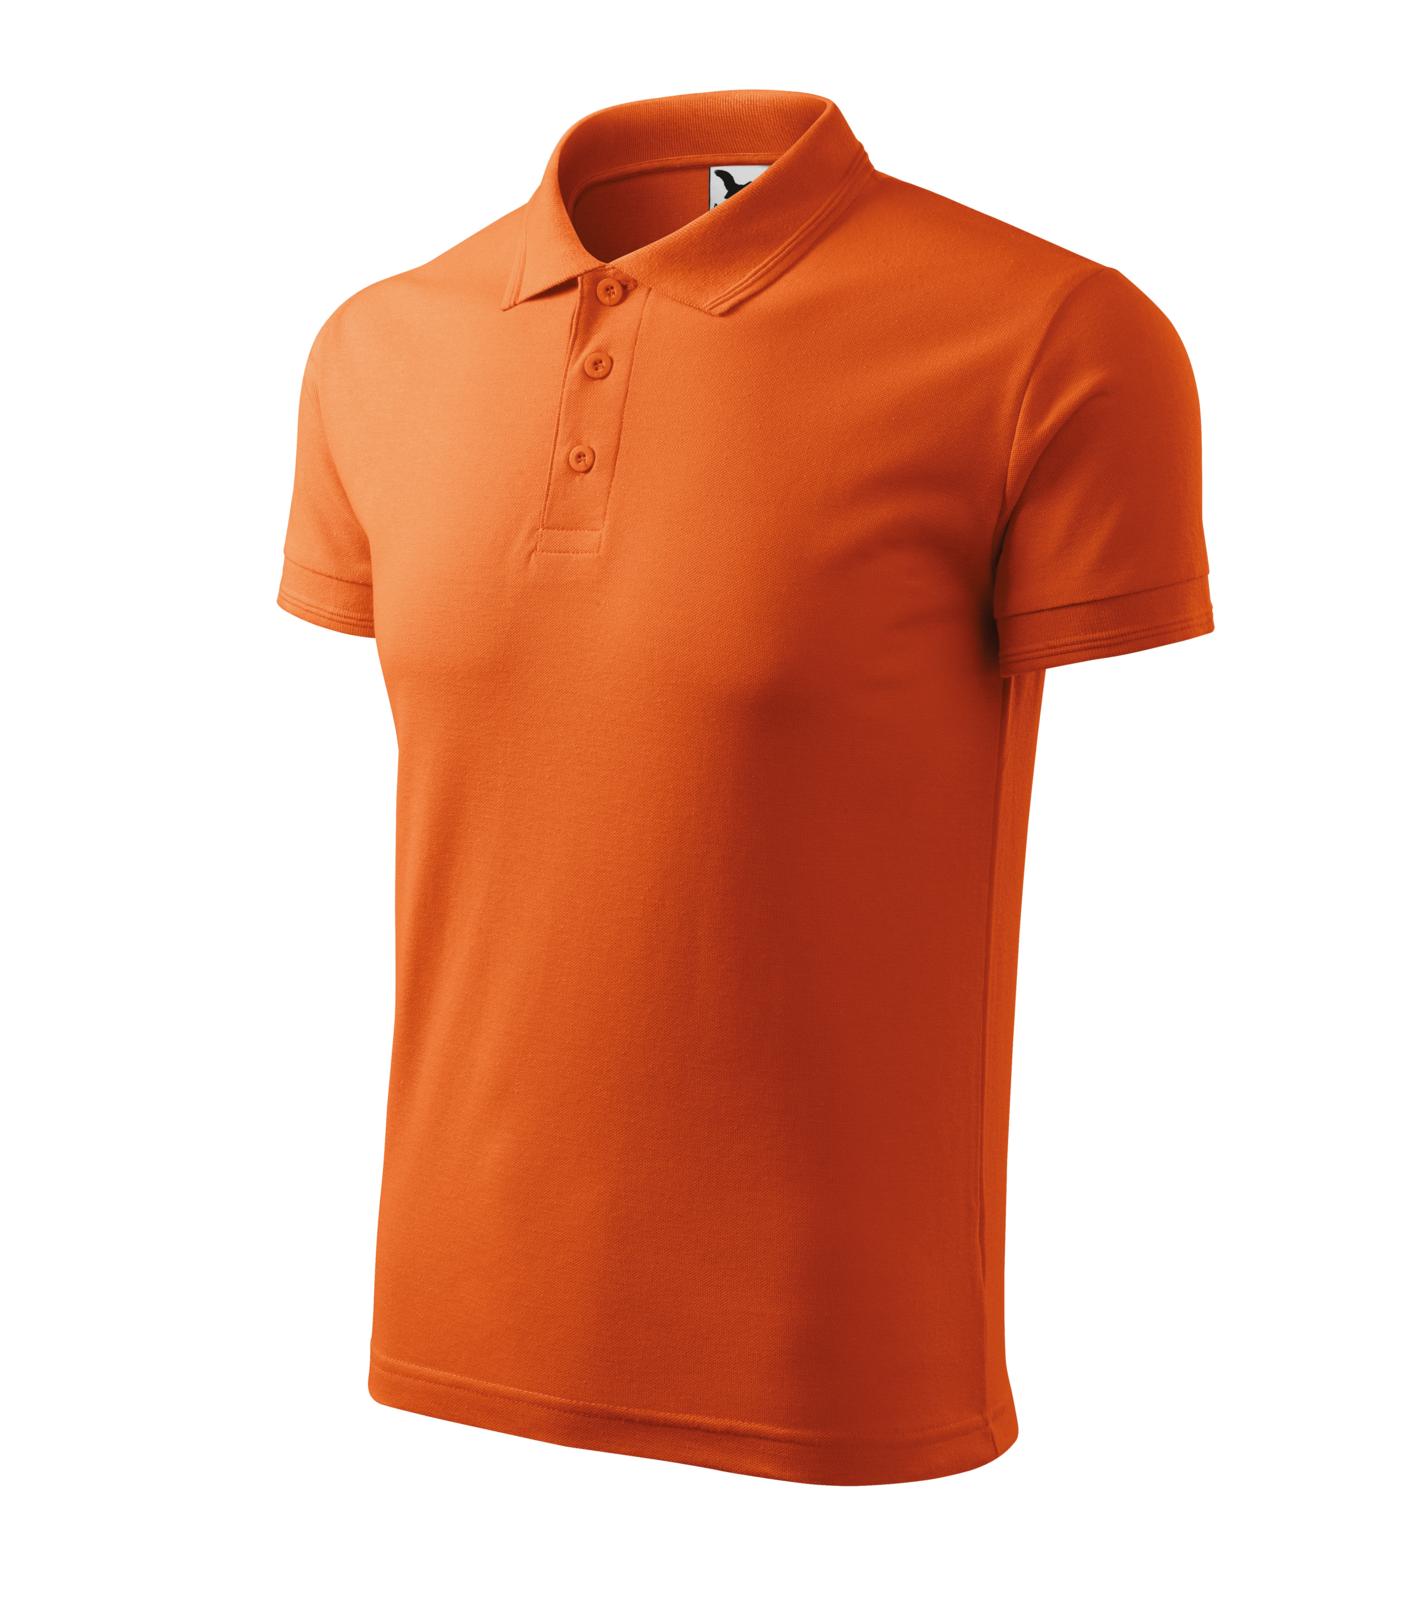 Pique Polo Polokošile pánská Barva: oranžová, Velikost: M